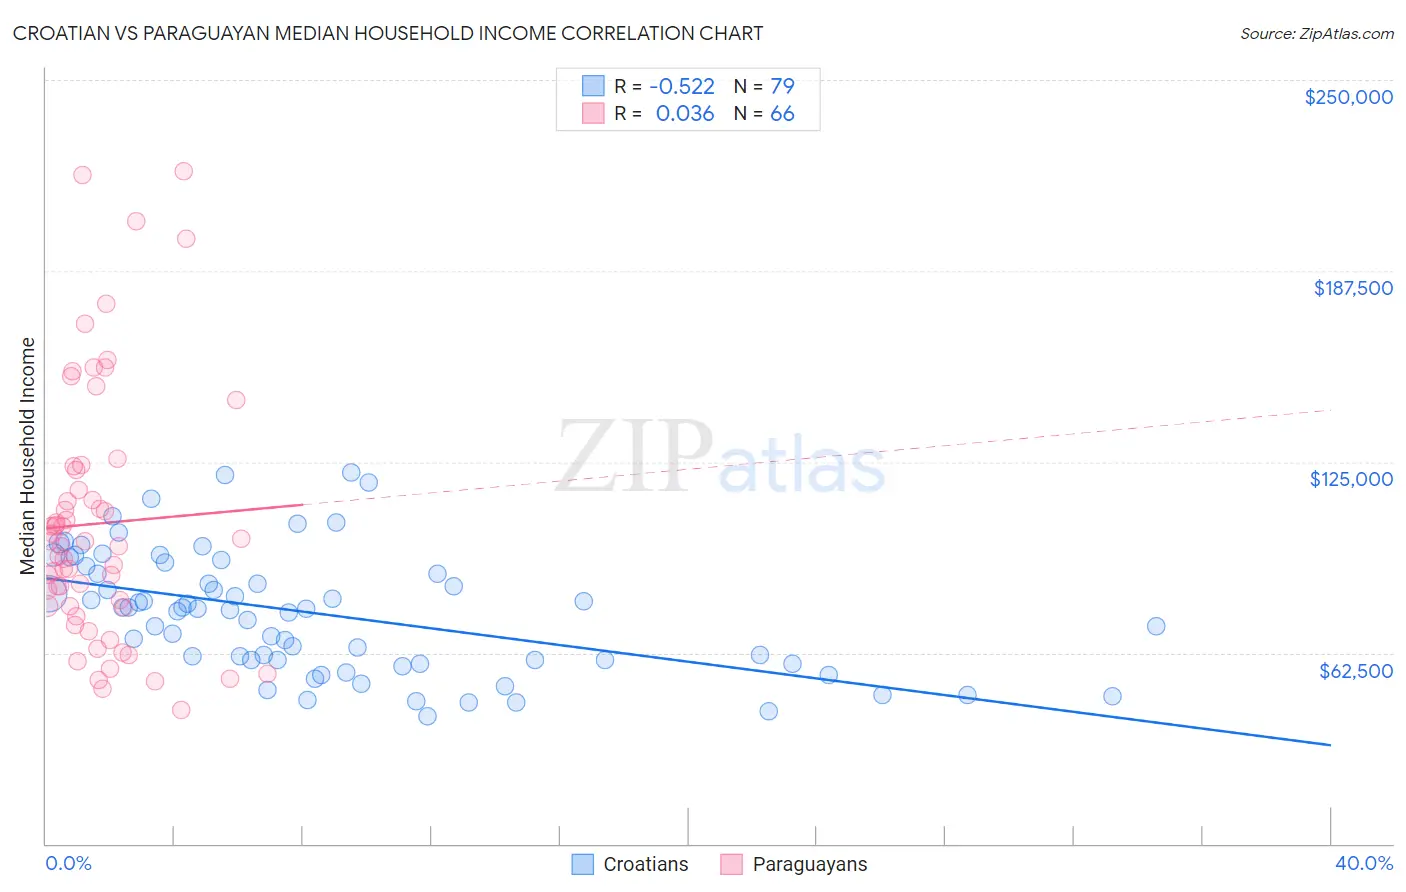 Croatian vs Paraguayan Median Household Income